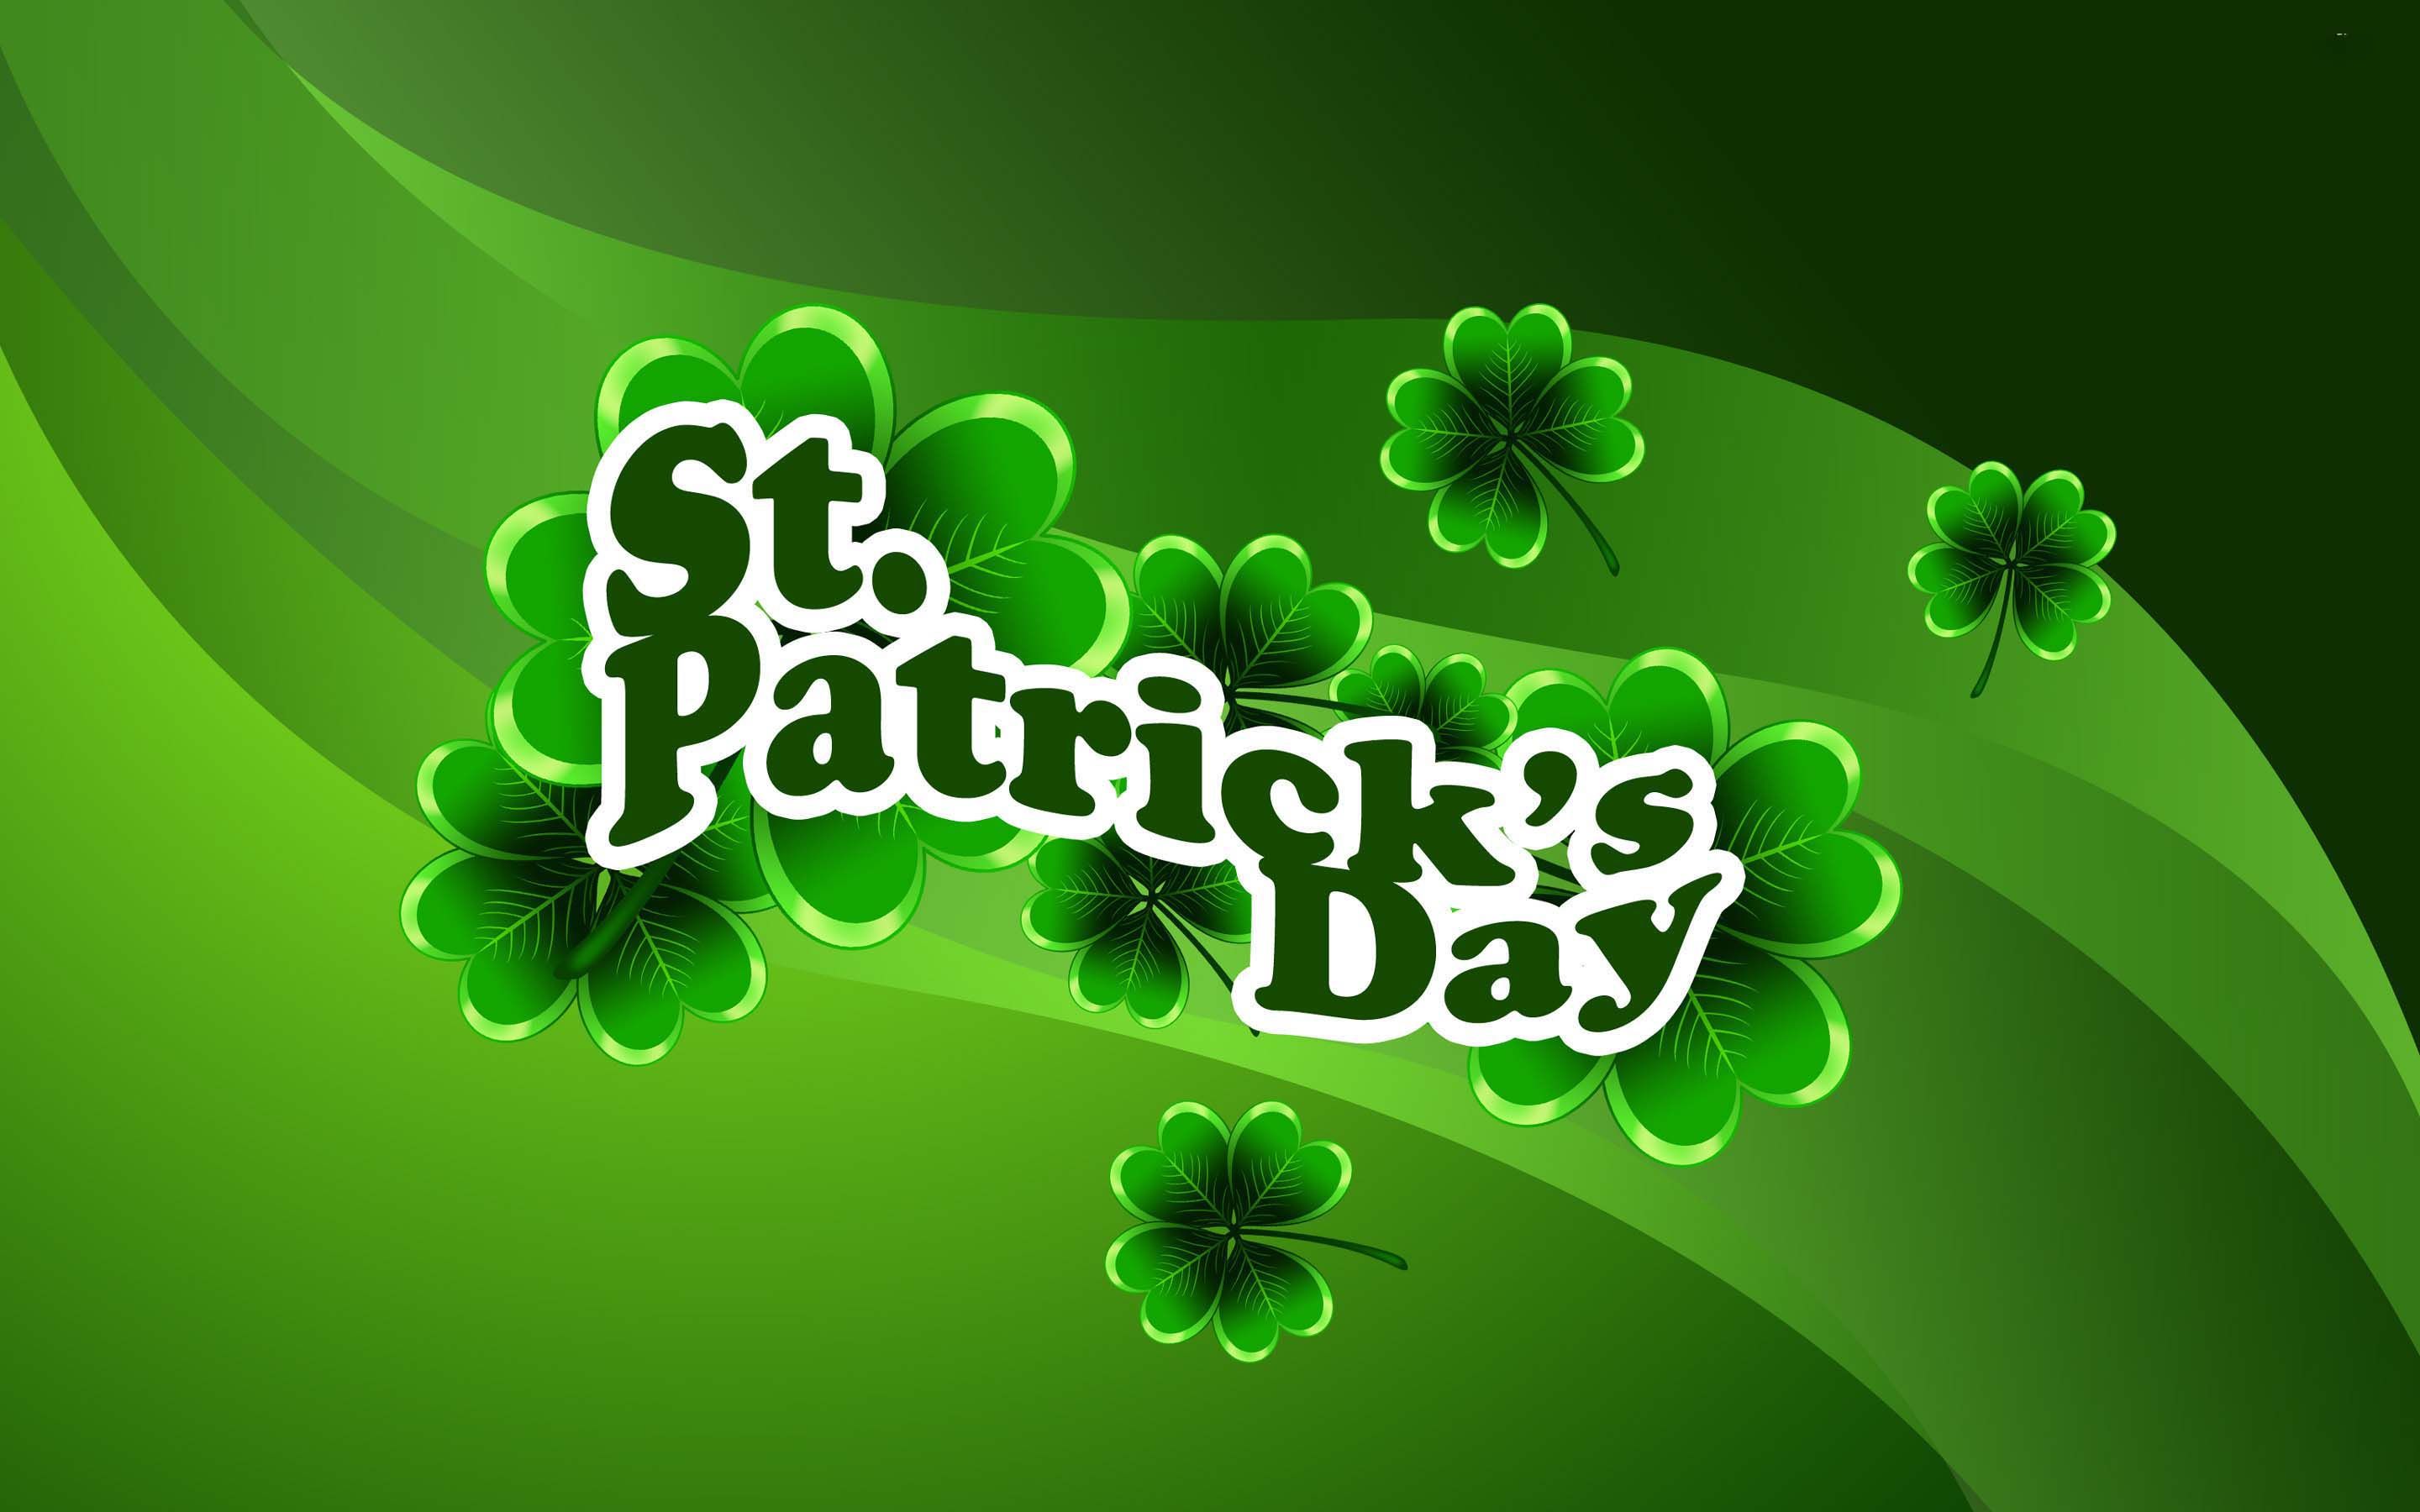 Happy Saint Patrick's Day Background Wallpaper 2880x1800 PC Wallpaper. St patricks day wallpaper, St patricks day picture, St patricks day quotes